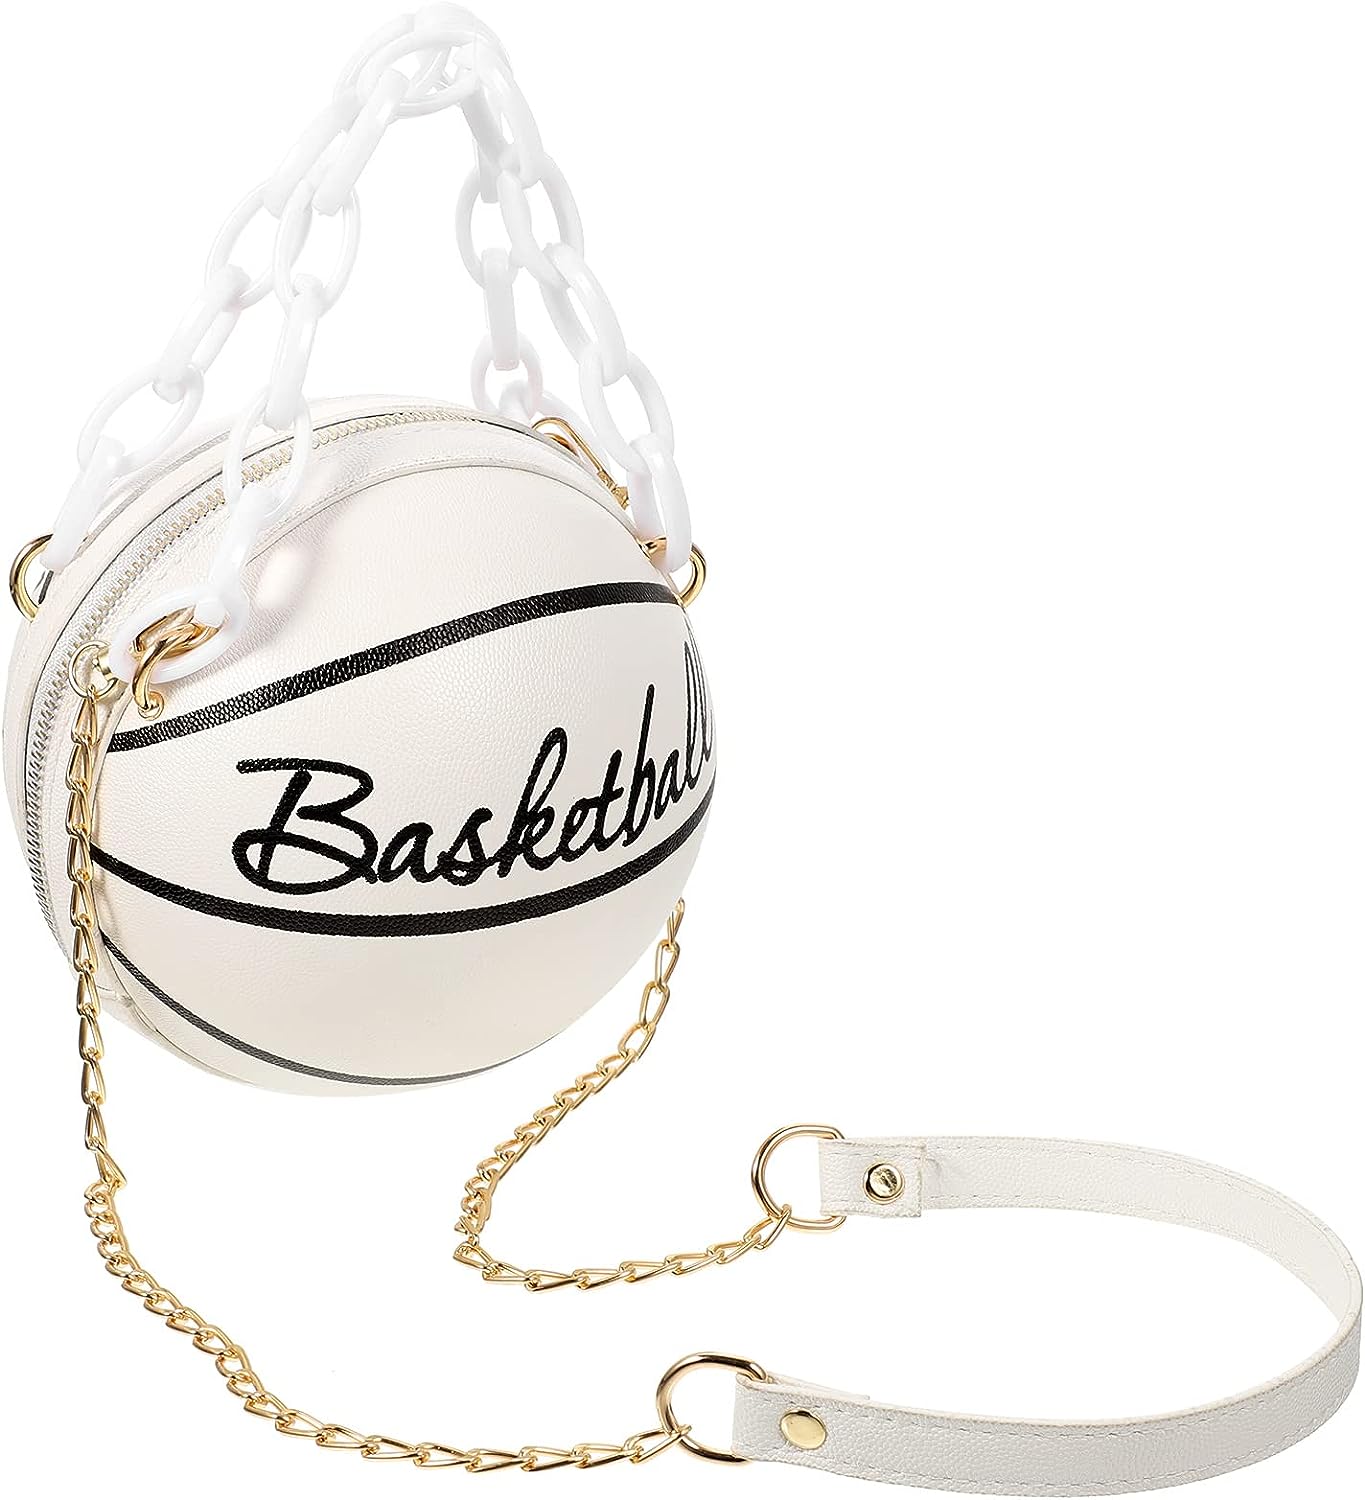 Abaodam Womens Basketball Shoulder Bag Messenger Bag Handbag Mini